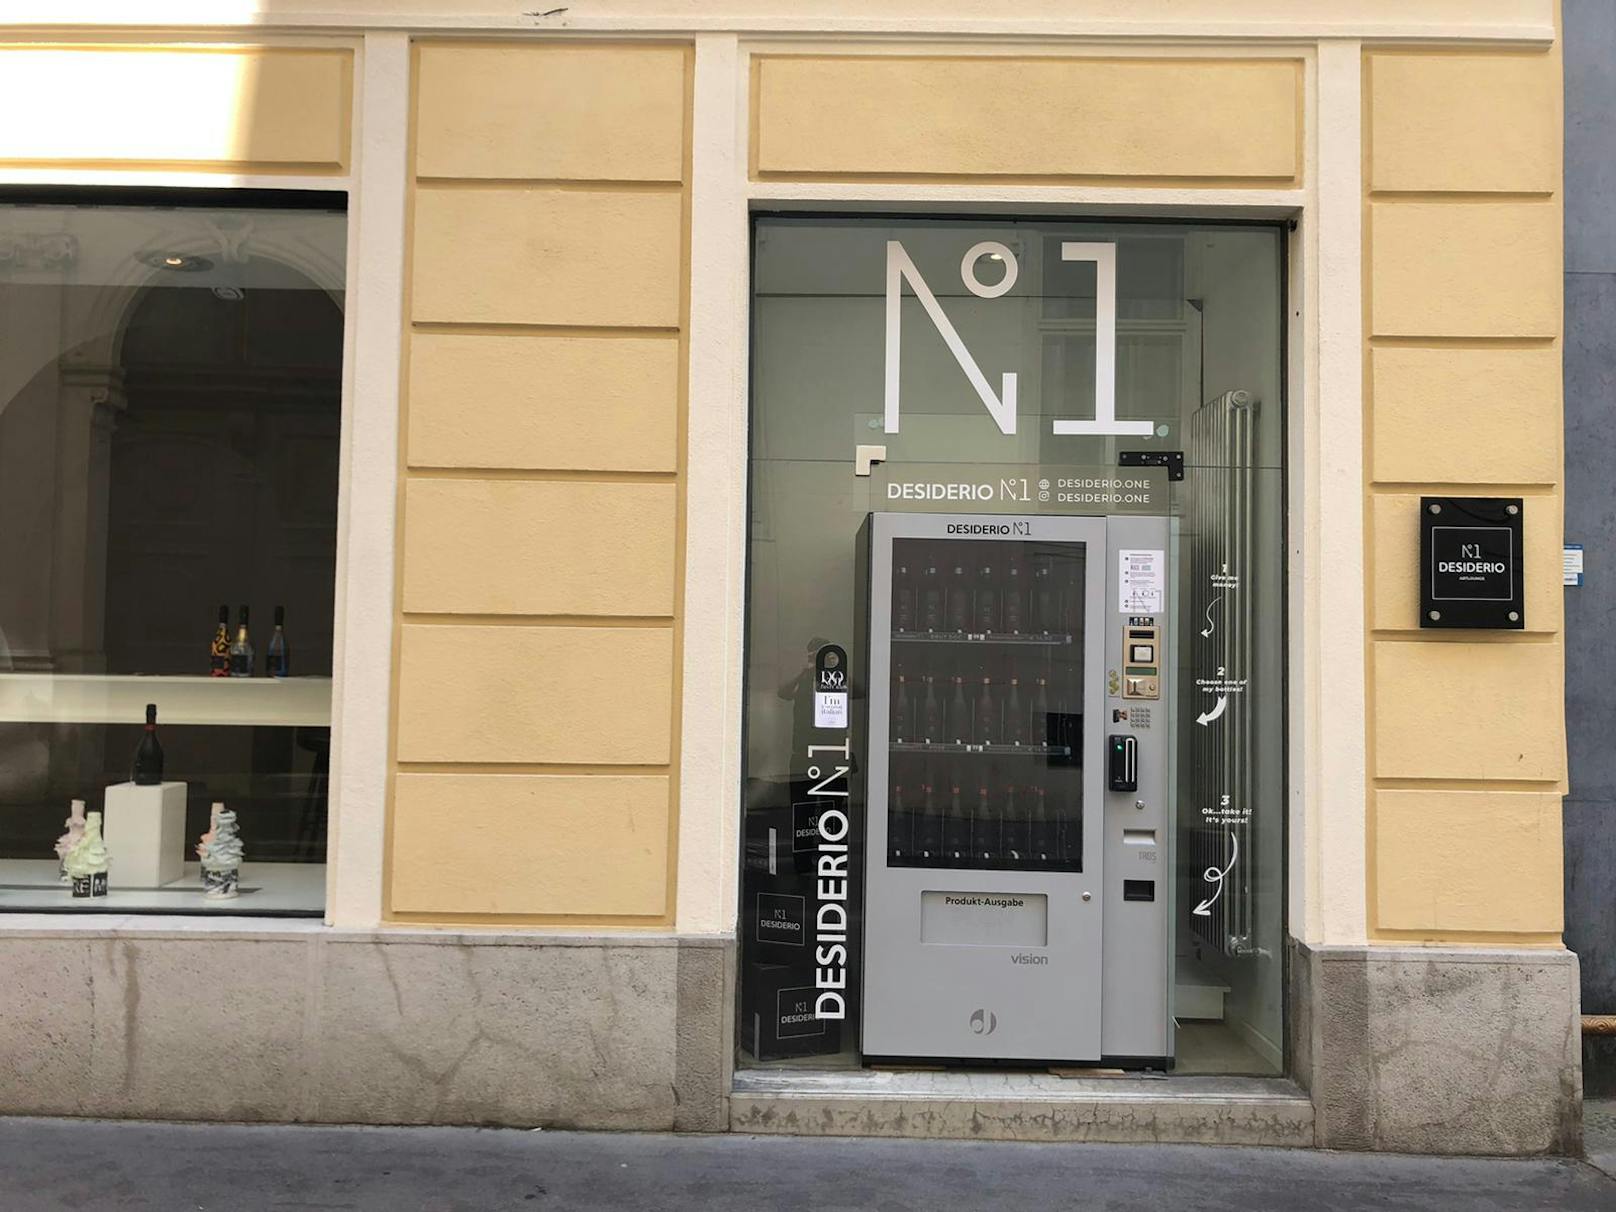 Prosecco-Automat in der Wiener Innenstadt.